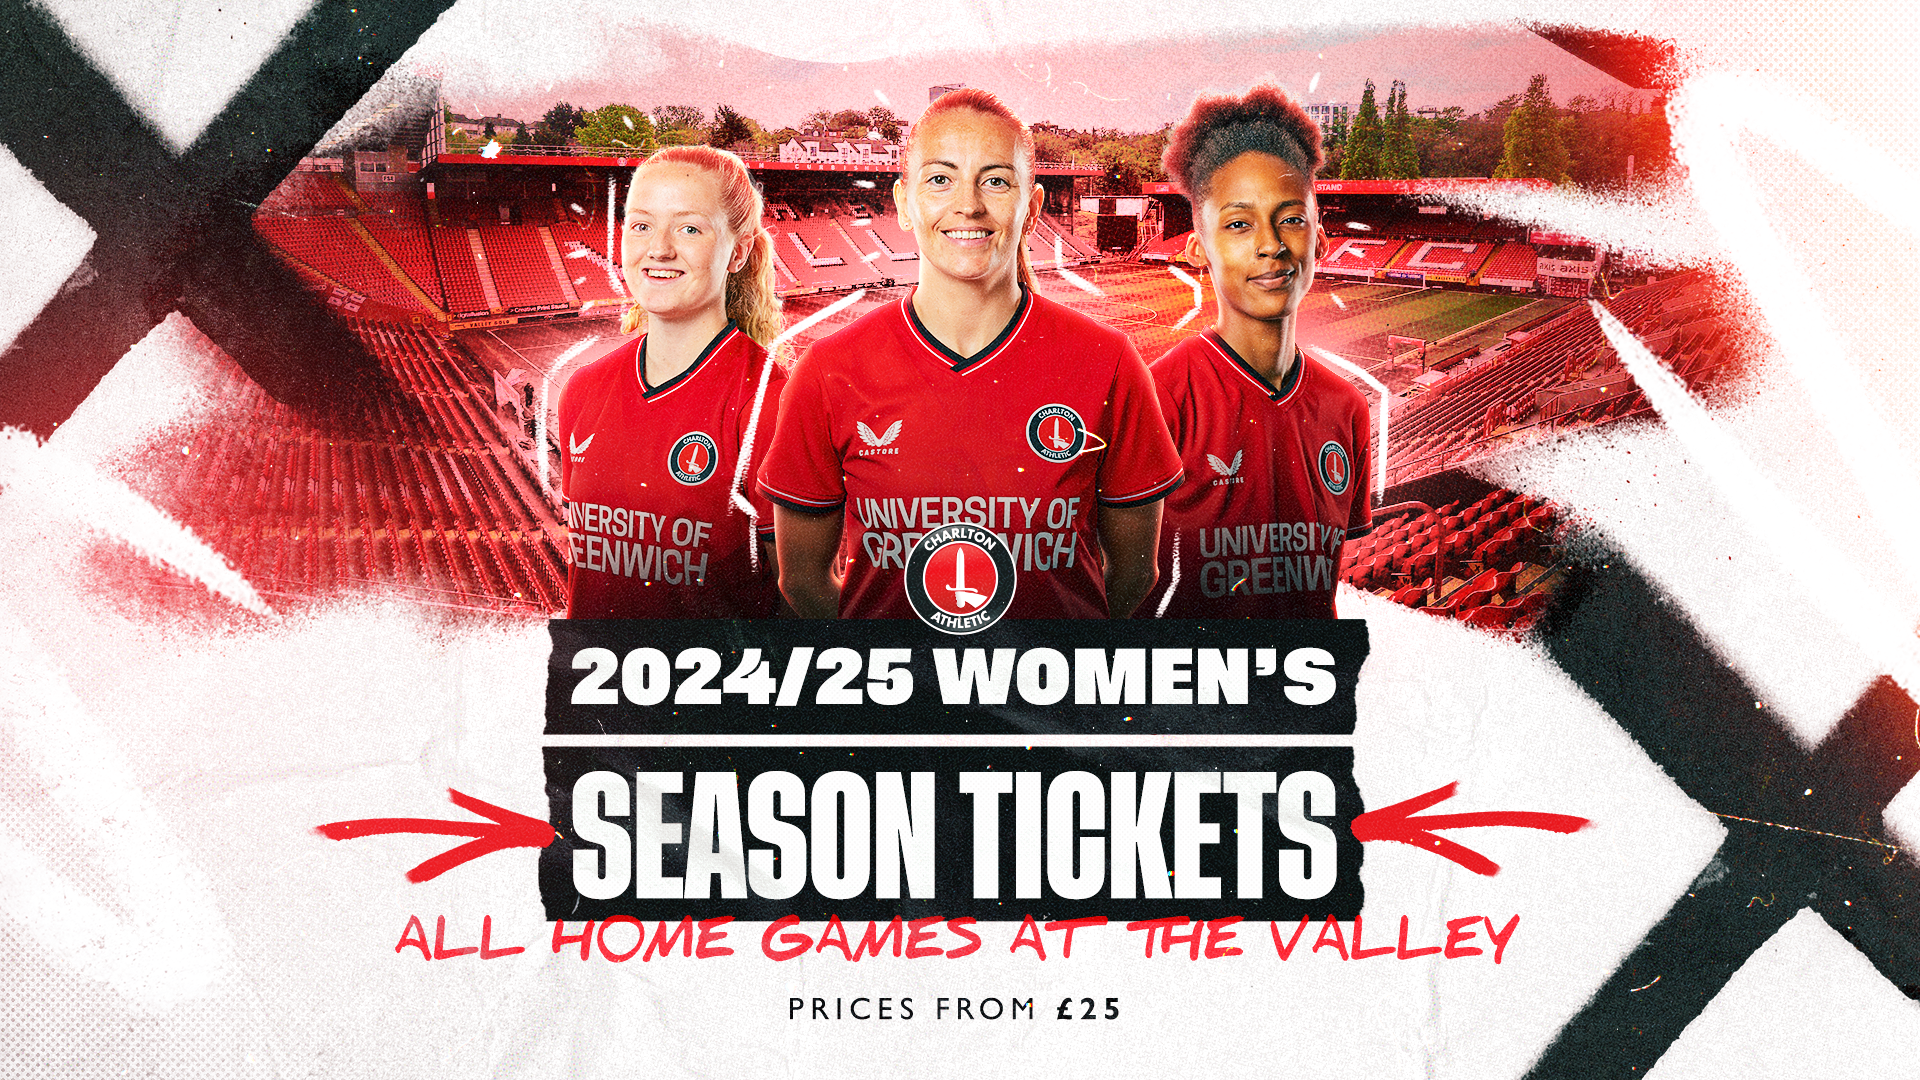 Season ticket image containing three women's players.